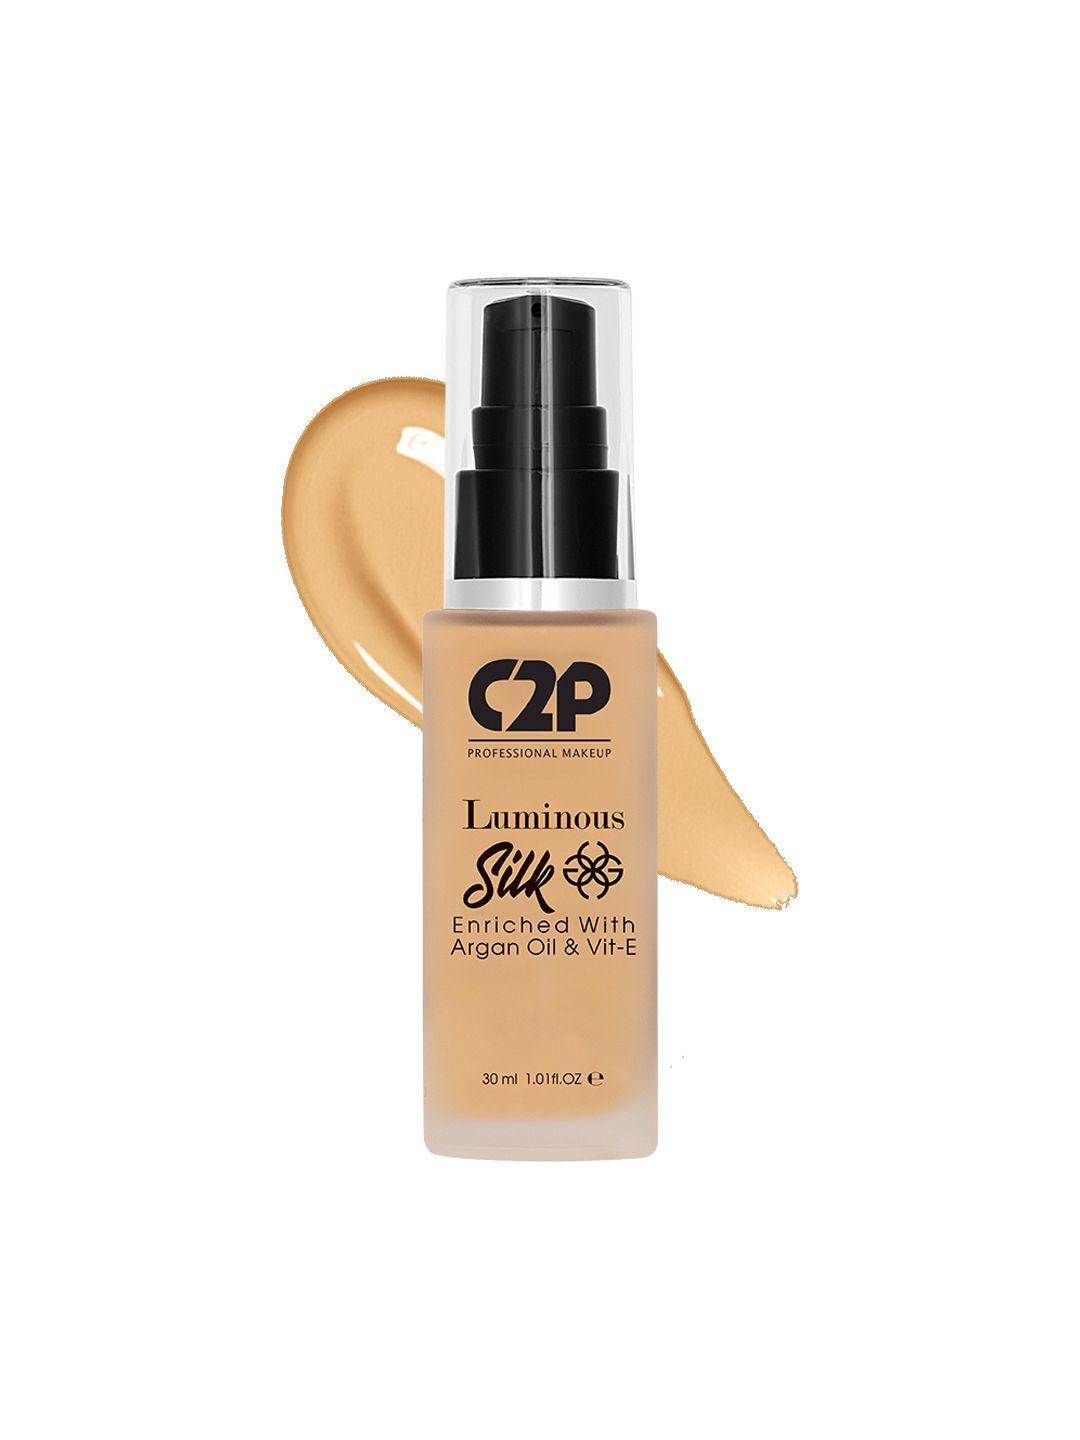 c2p professional makeup luminous silk liquid foundation with argan oil - medium tan 09